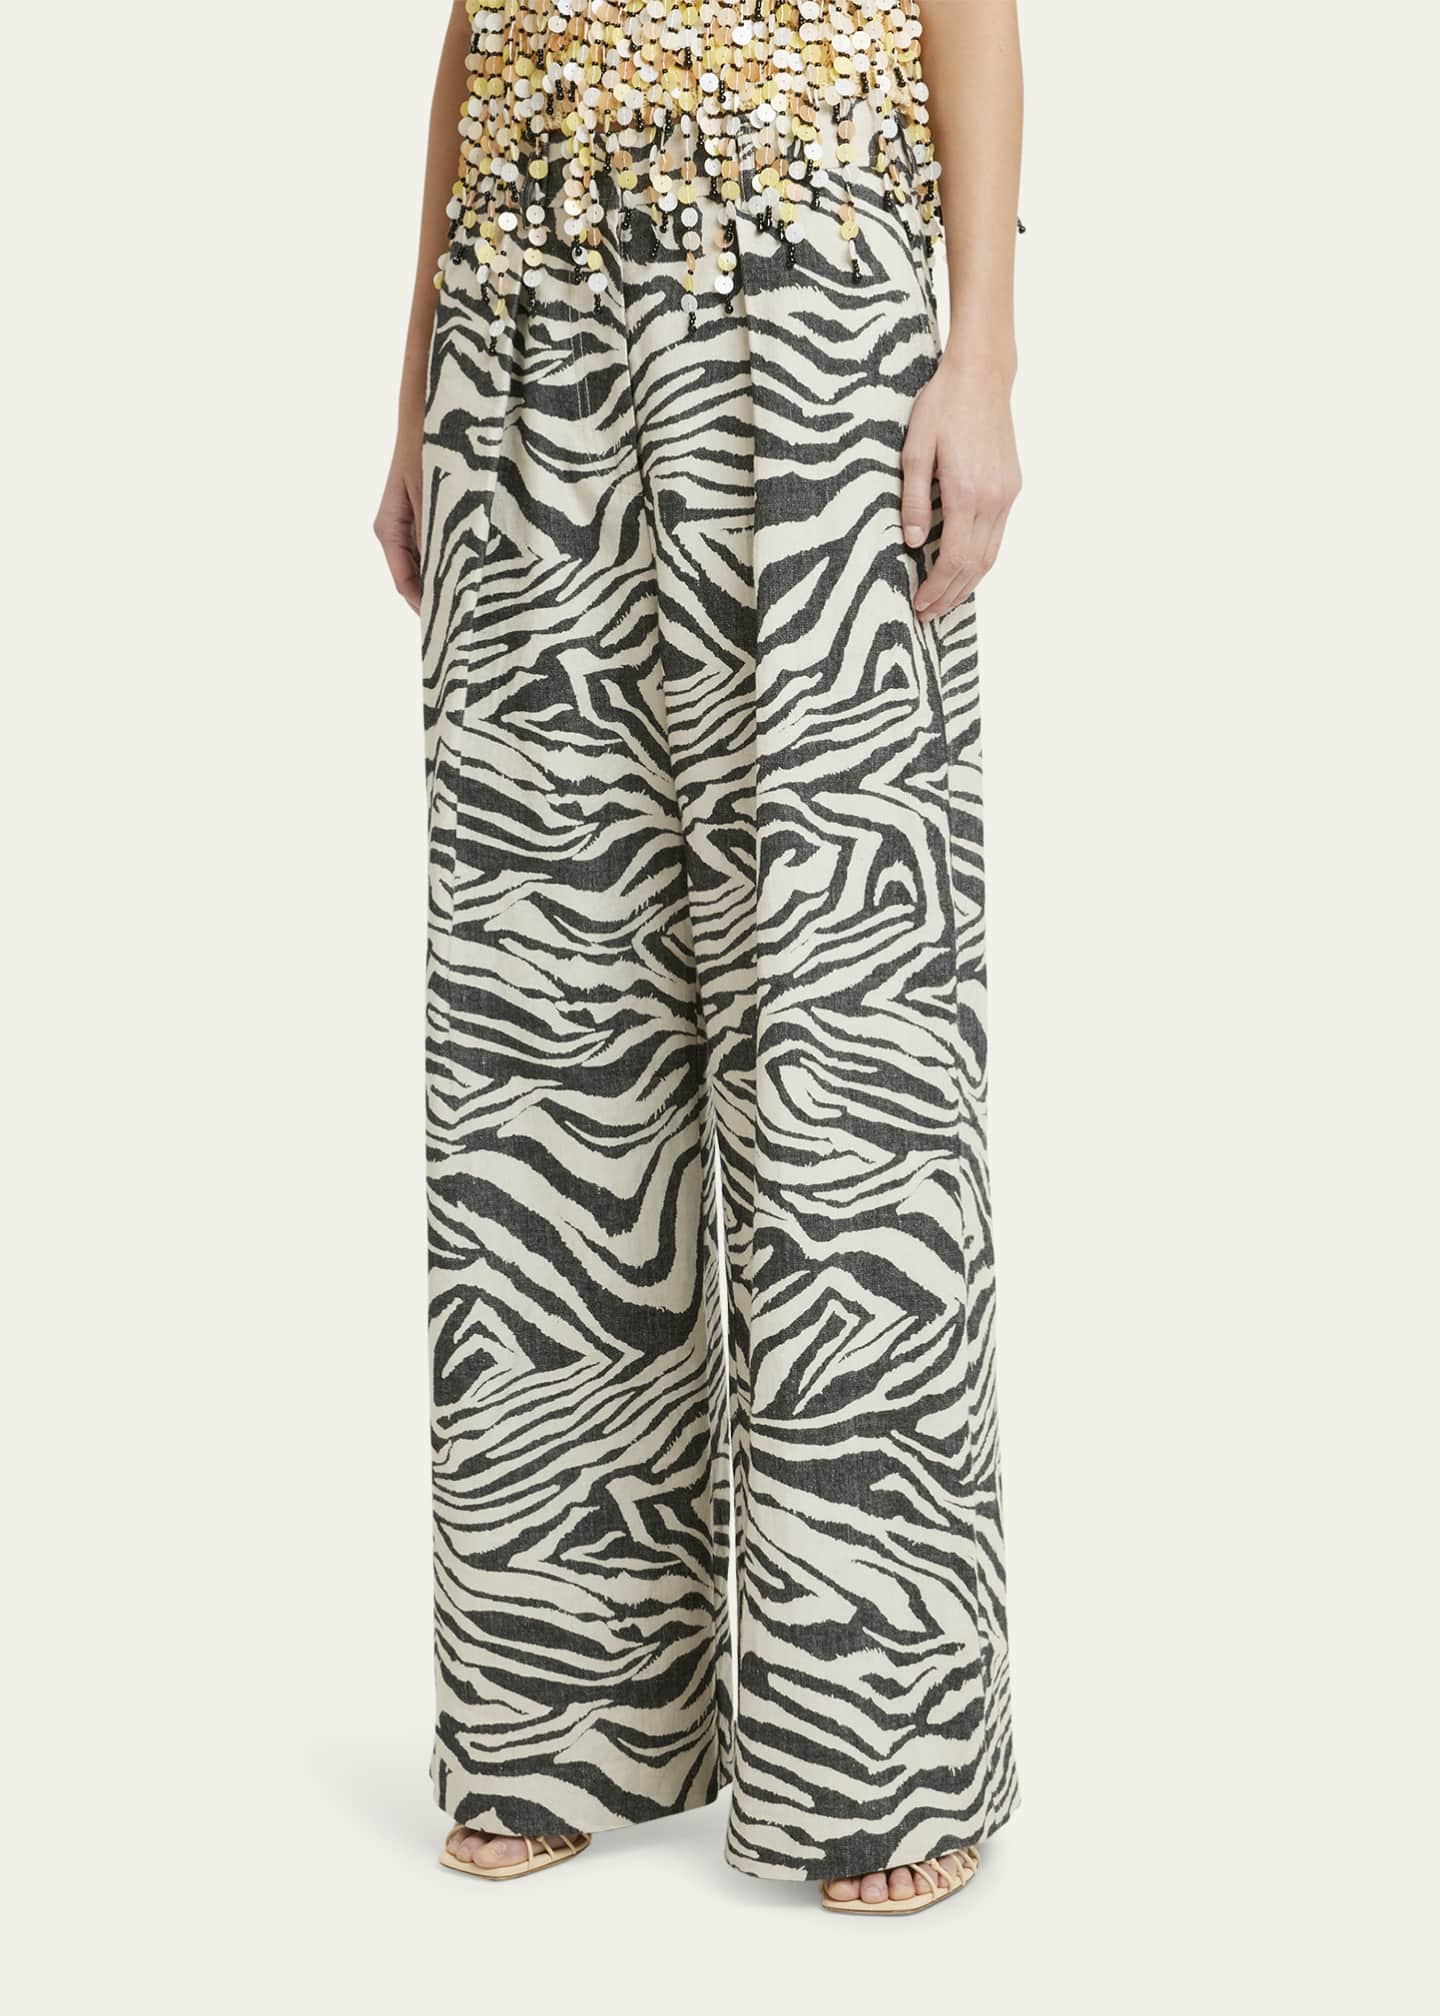 Cai Pant - Zebra Black and White Zebra Cotton Pants - Ulla Johnson